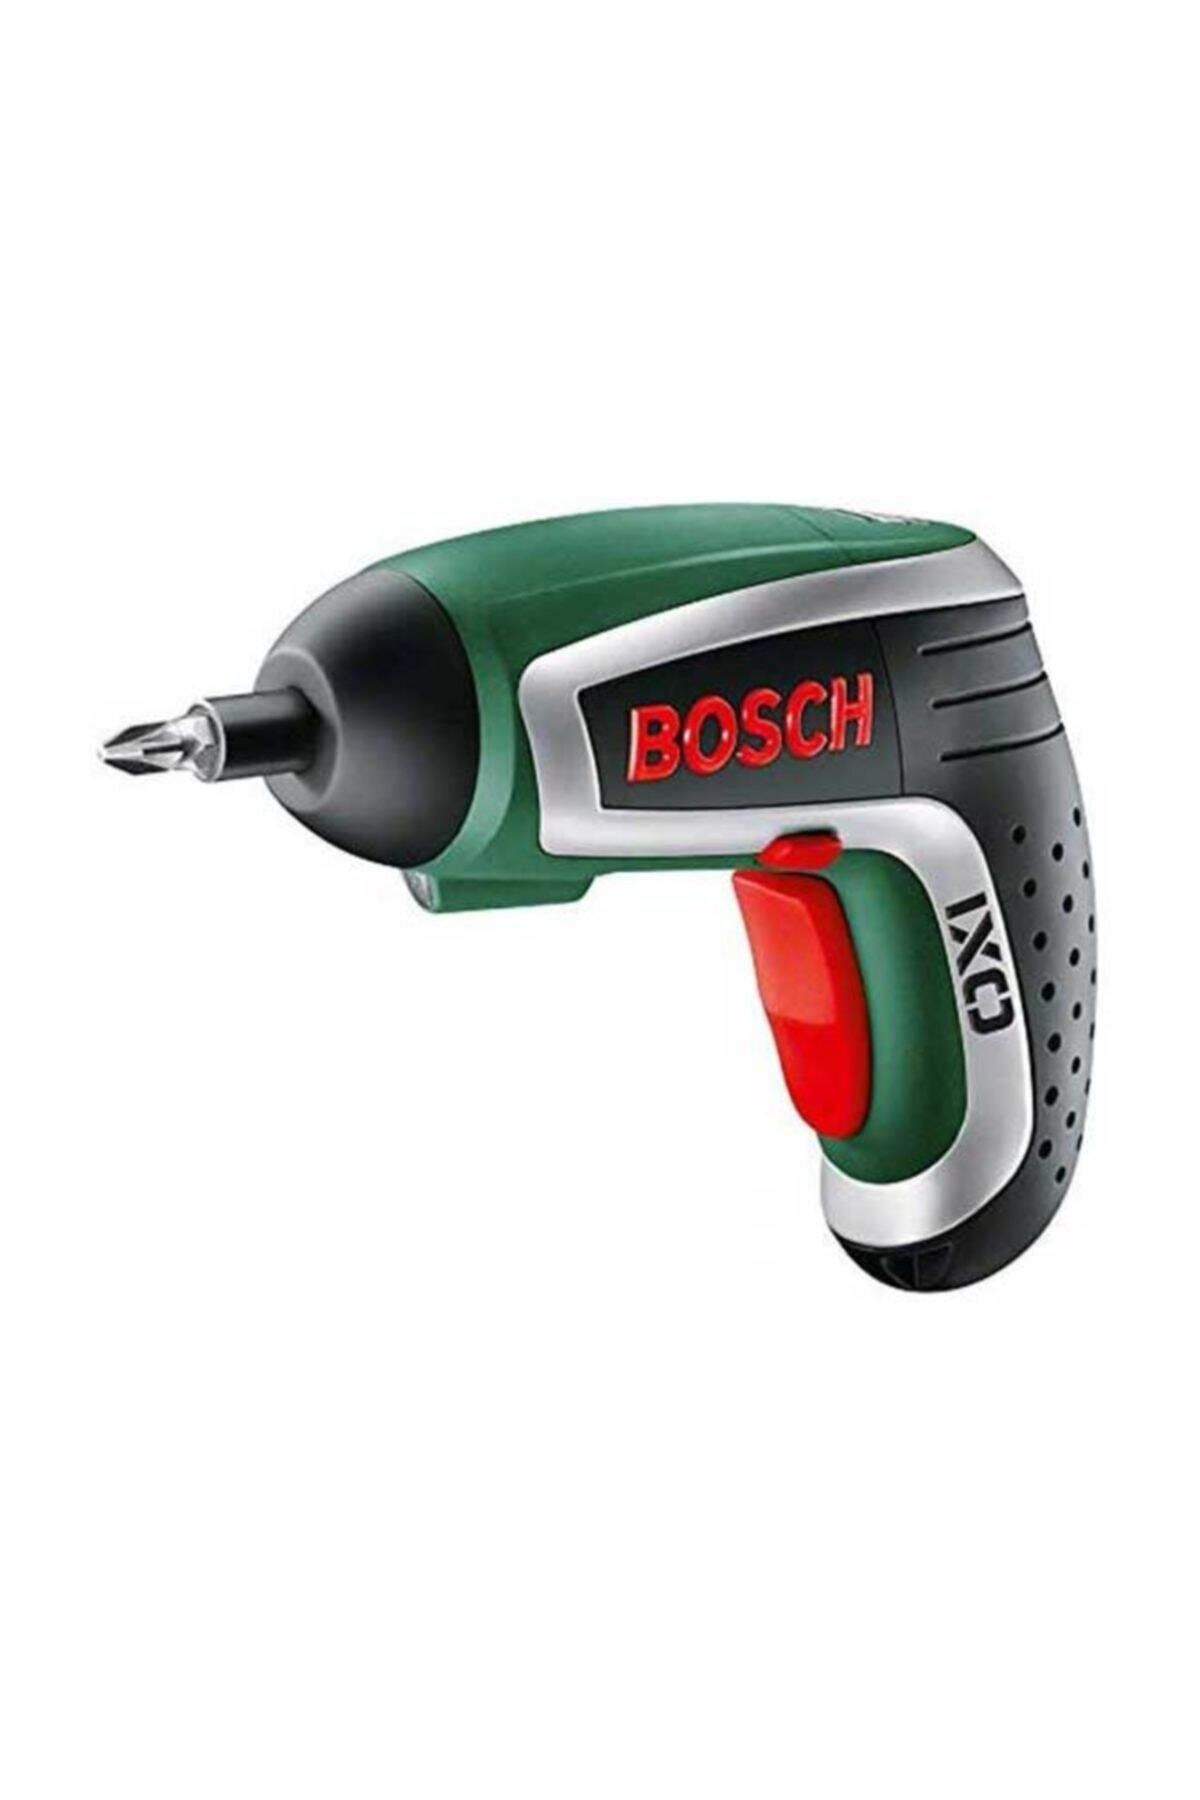 Bosch Ixo V Akülü Vidalama Makinesi